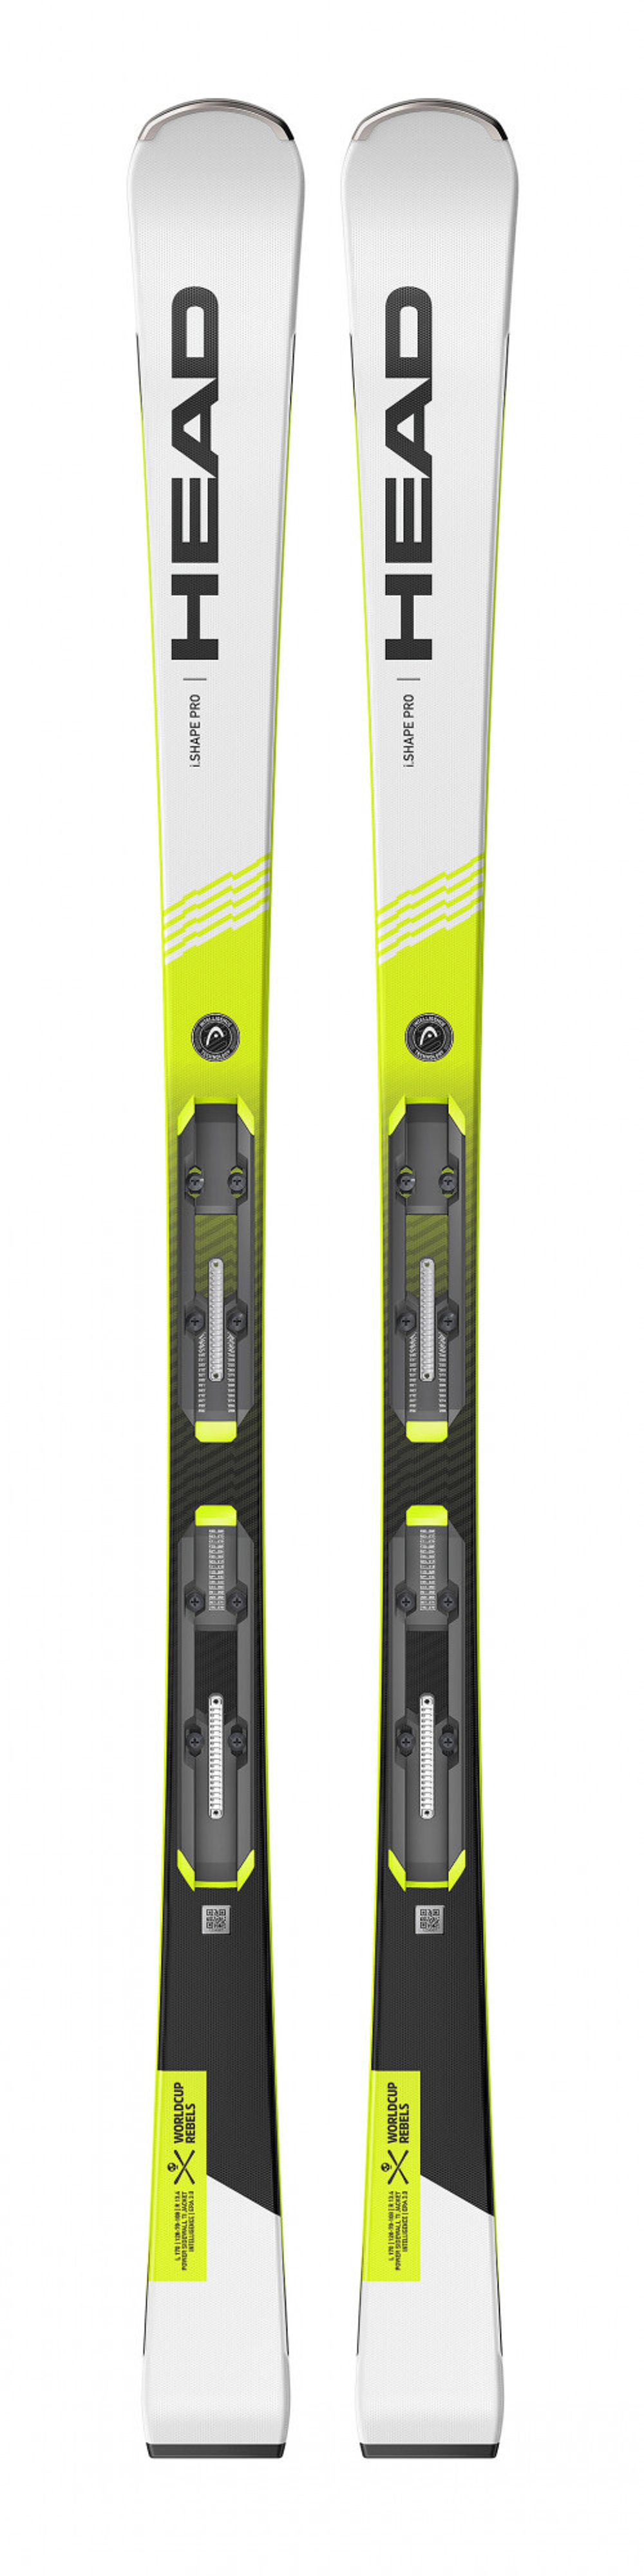 HEAD экспертные лыжи  313400 WC Rebels iShape Pro LYT-PR с креплениями  PR 11 GW BRAKE 78 [G]  white/yellow